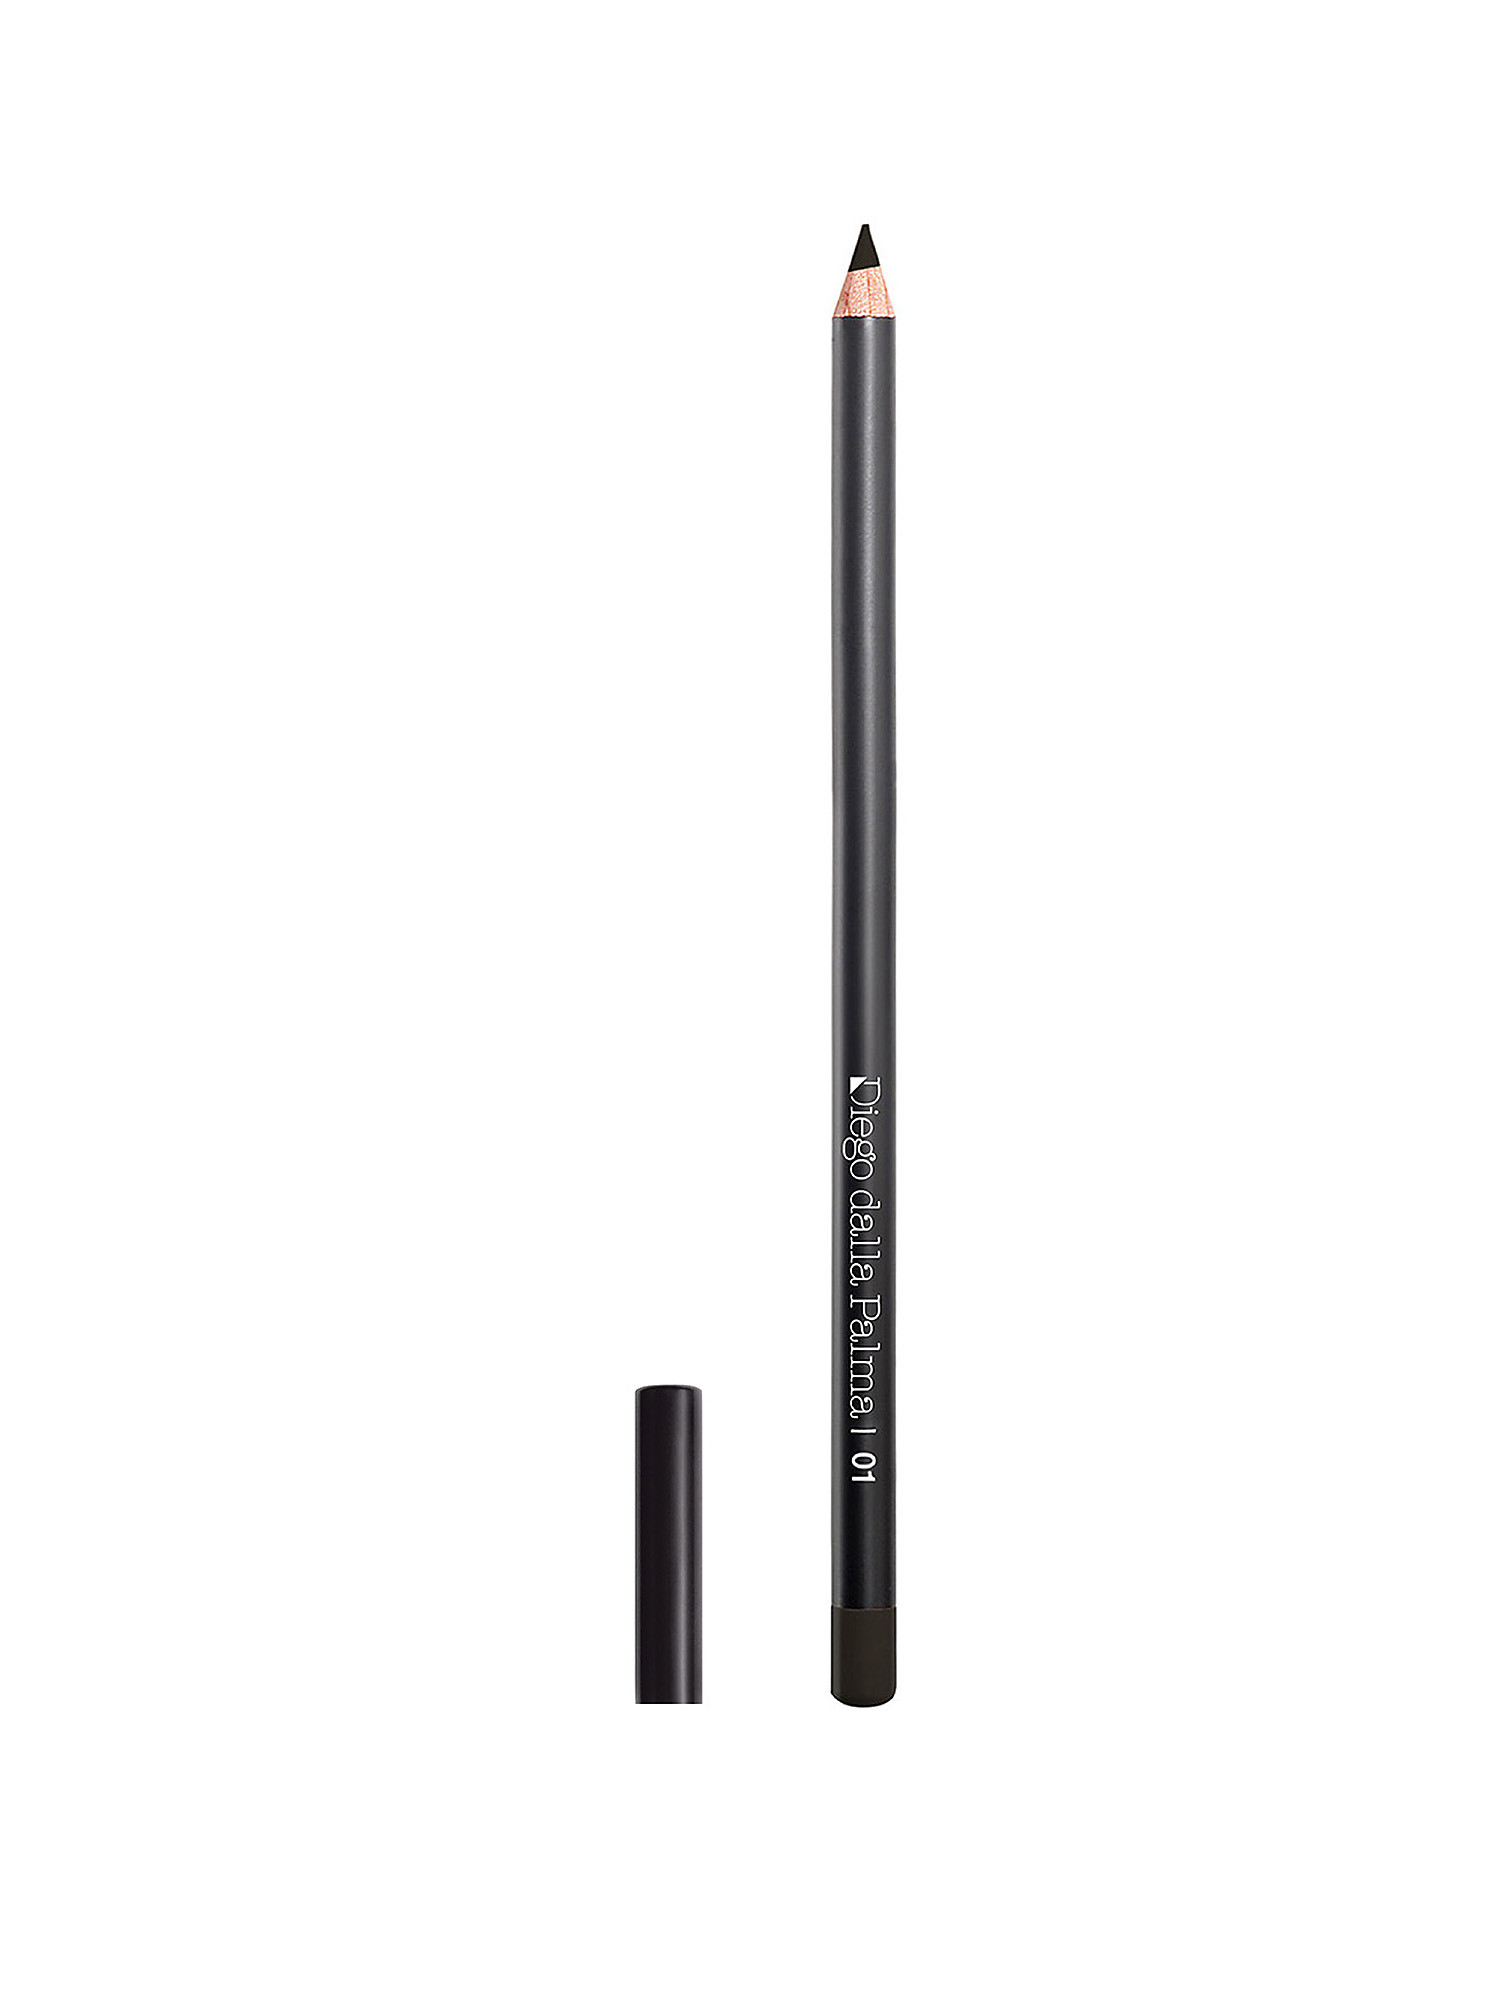 Eye pencil - 01 black, Black, large image number 0